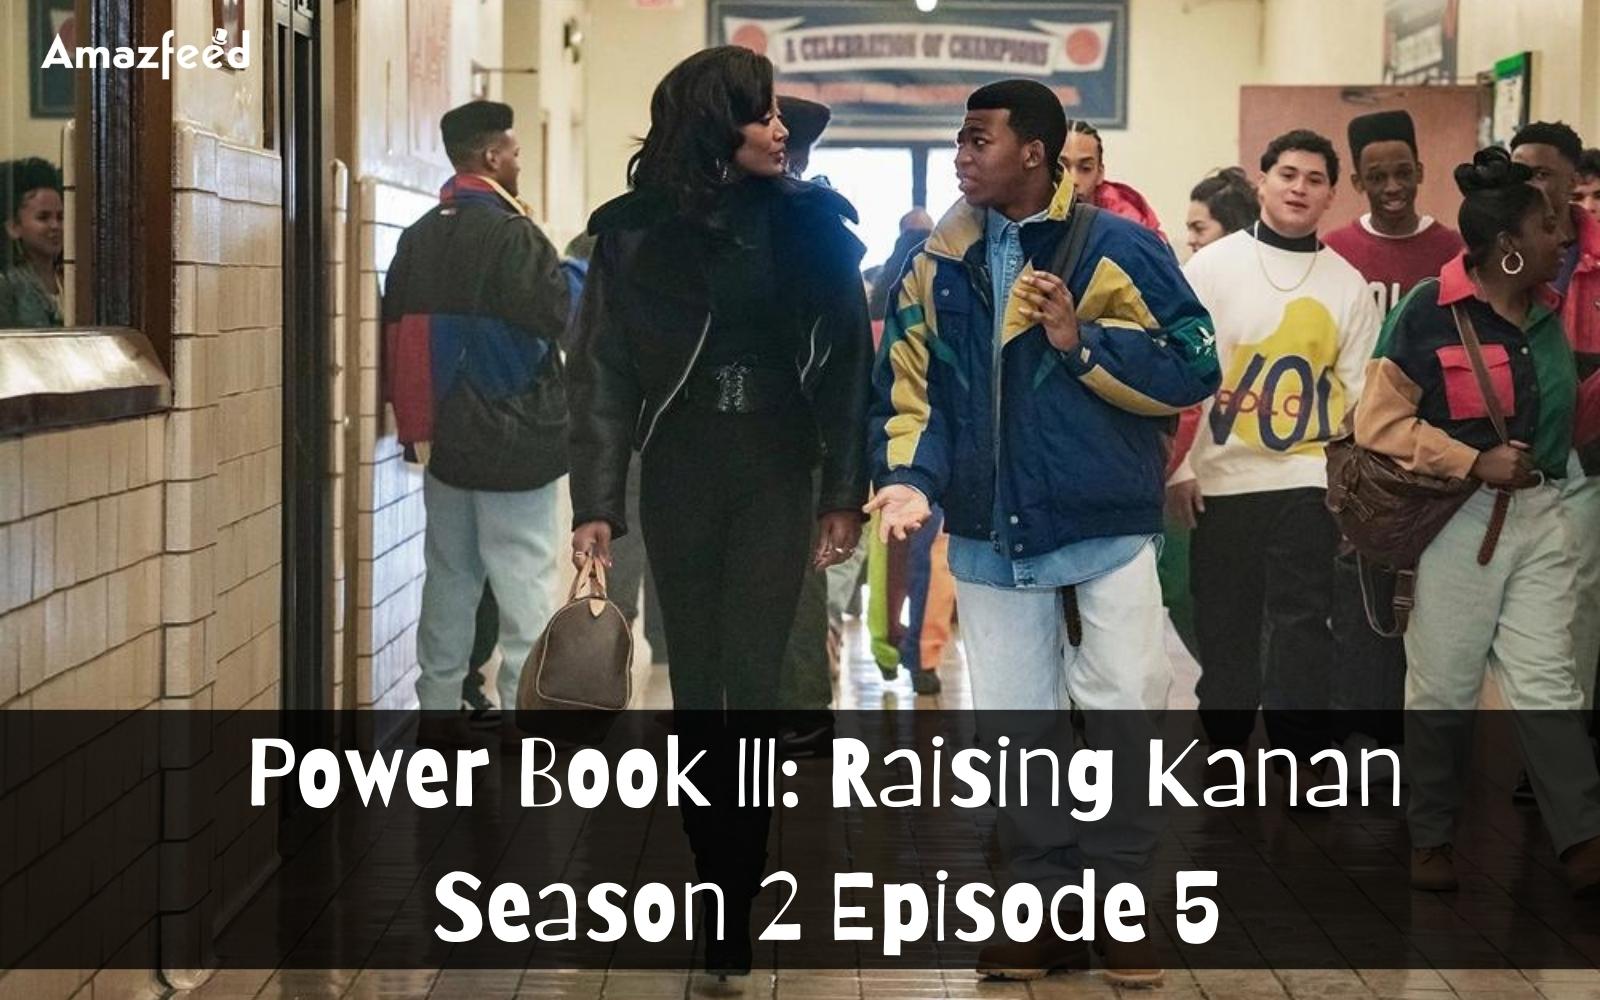 Power Book III: Raising Kanan Season 2 Episode 5 "What Happens in the